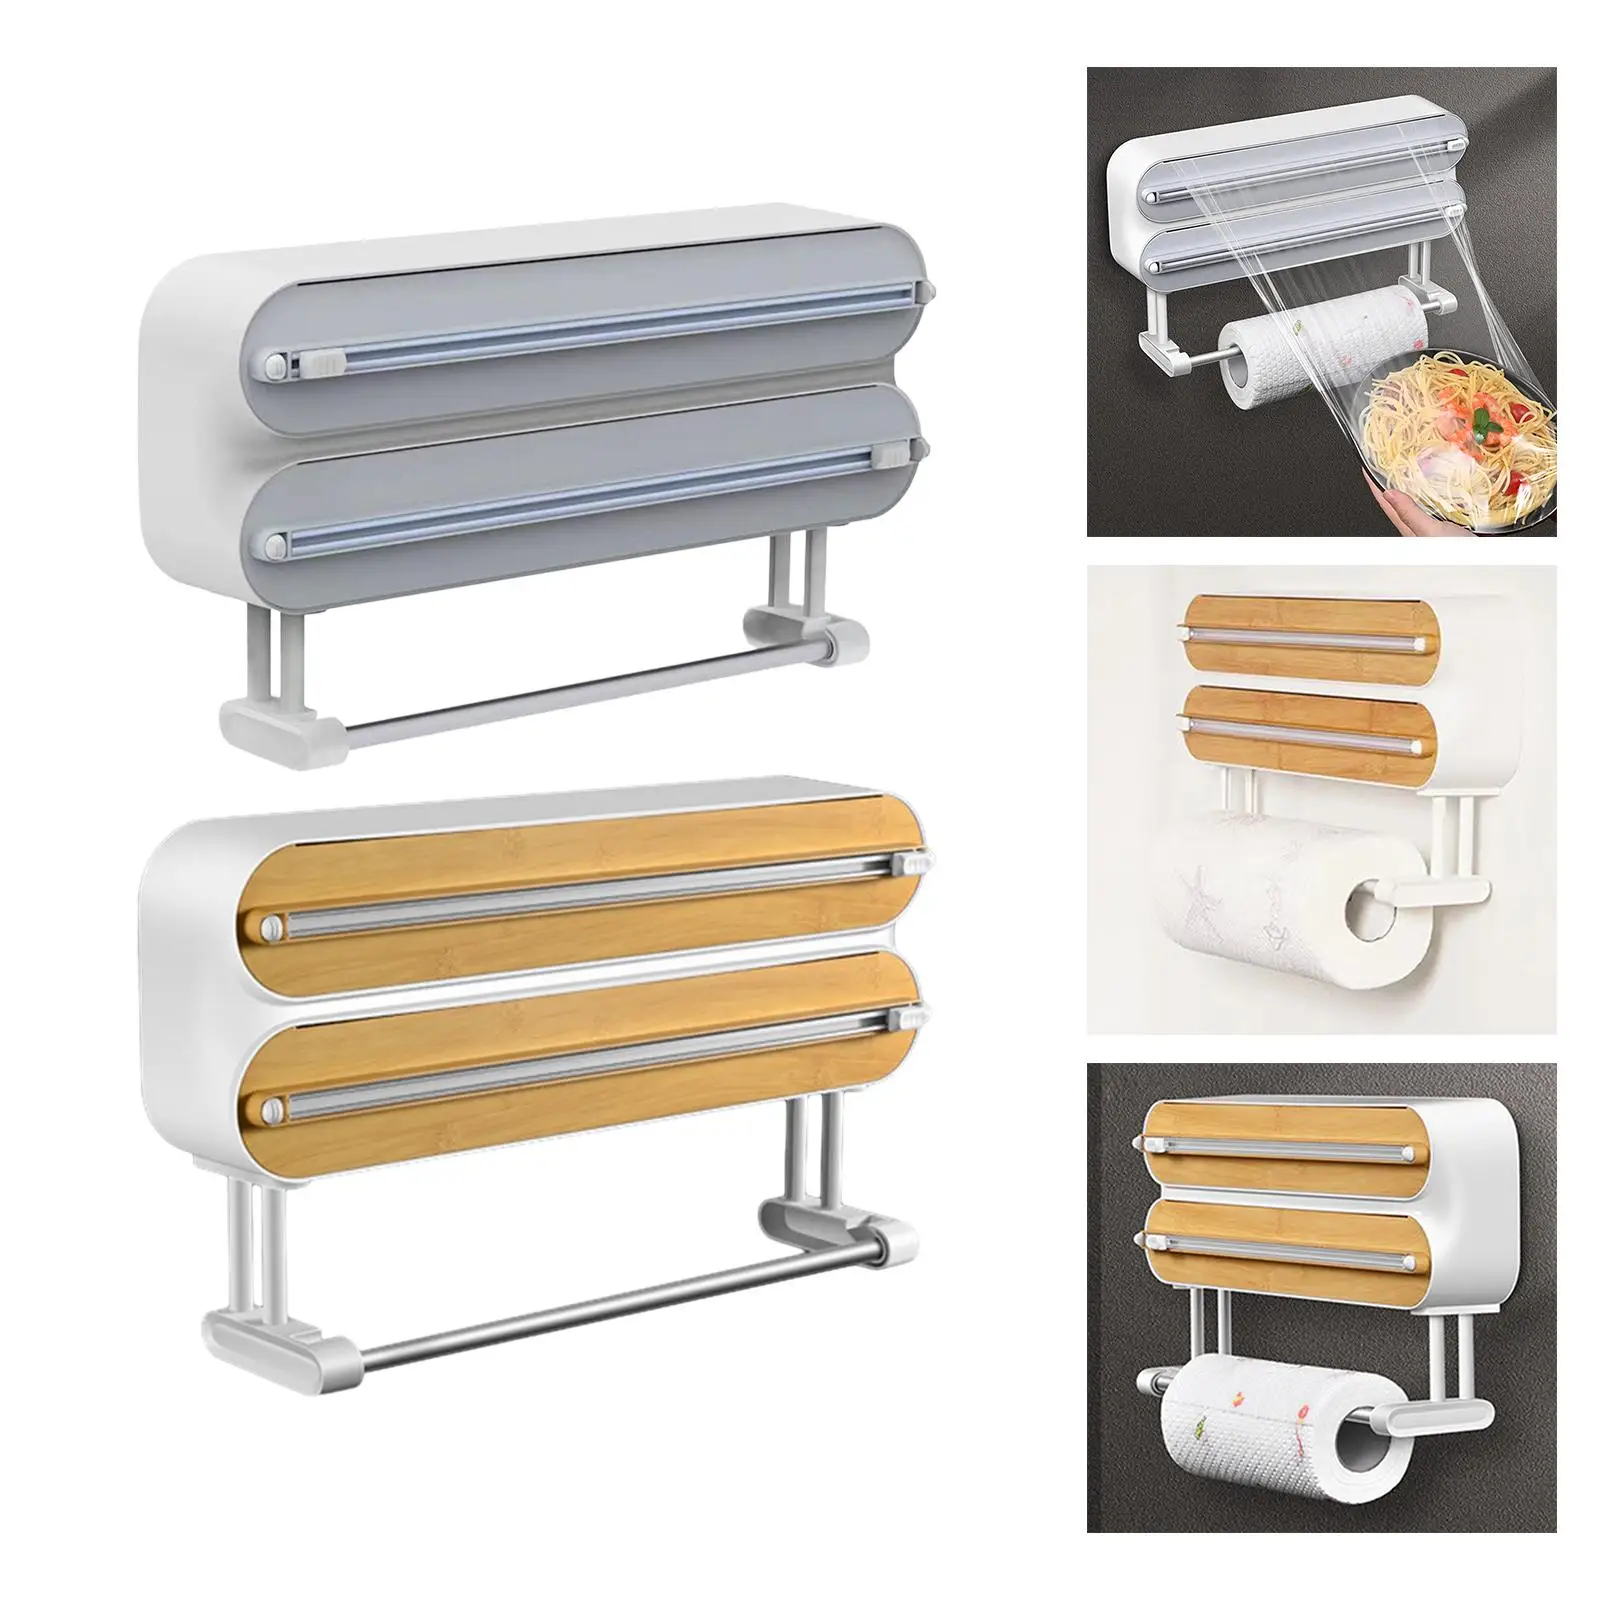 Cling Film Dispenser with Cutter Food Wrap Cutter Slide Cutter Kitchen Roll Paper Holder for Desktop Kitchen Baking Fridge